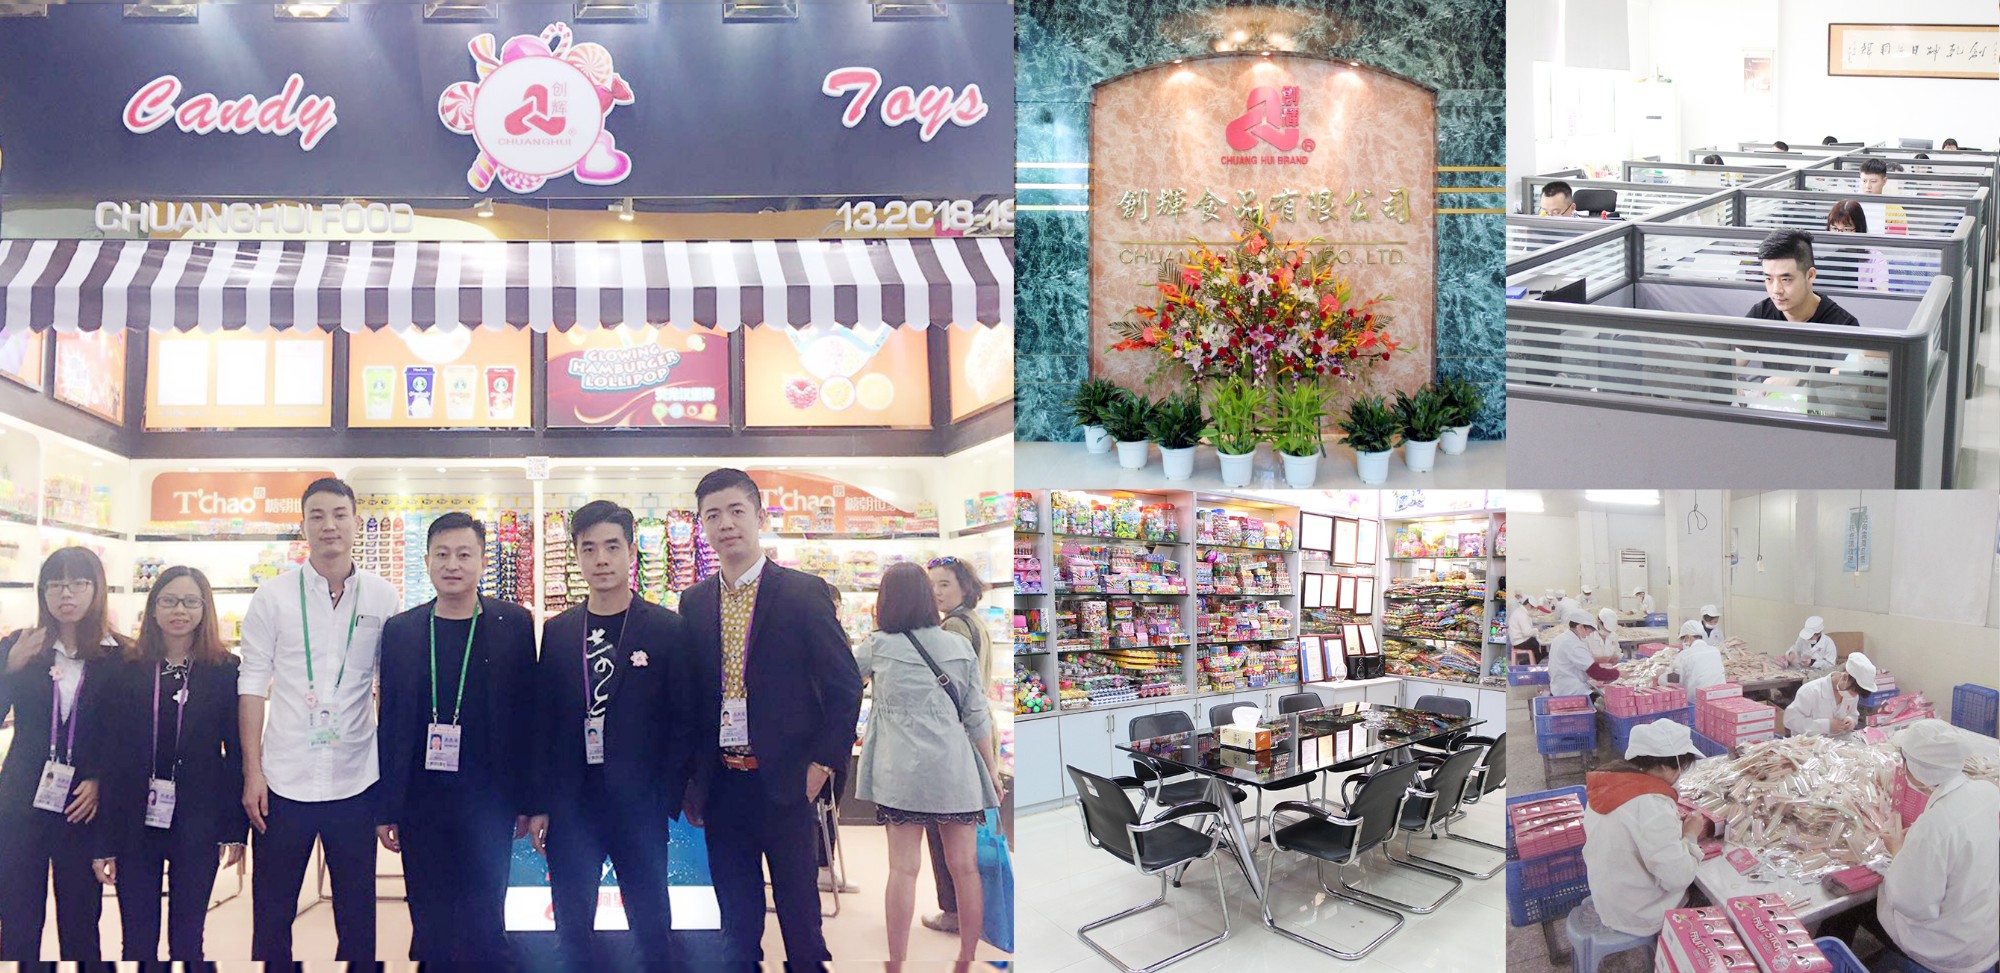 Guangdong Chuanghui Foodstuffs Co., Ltd